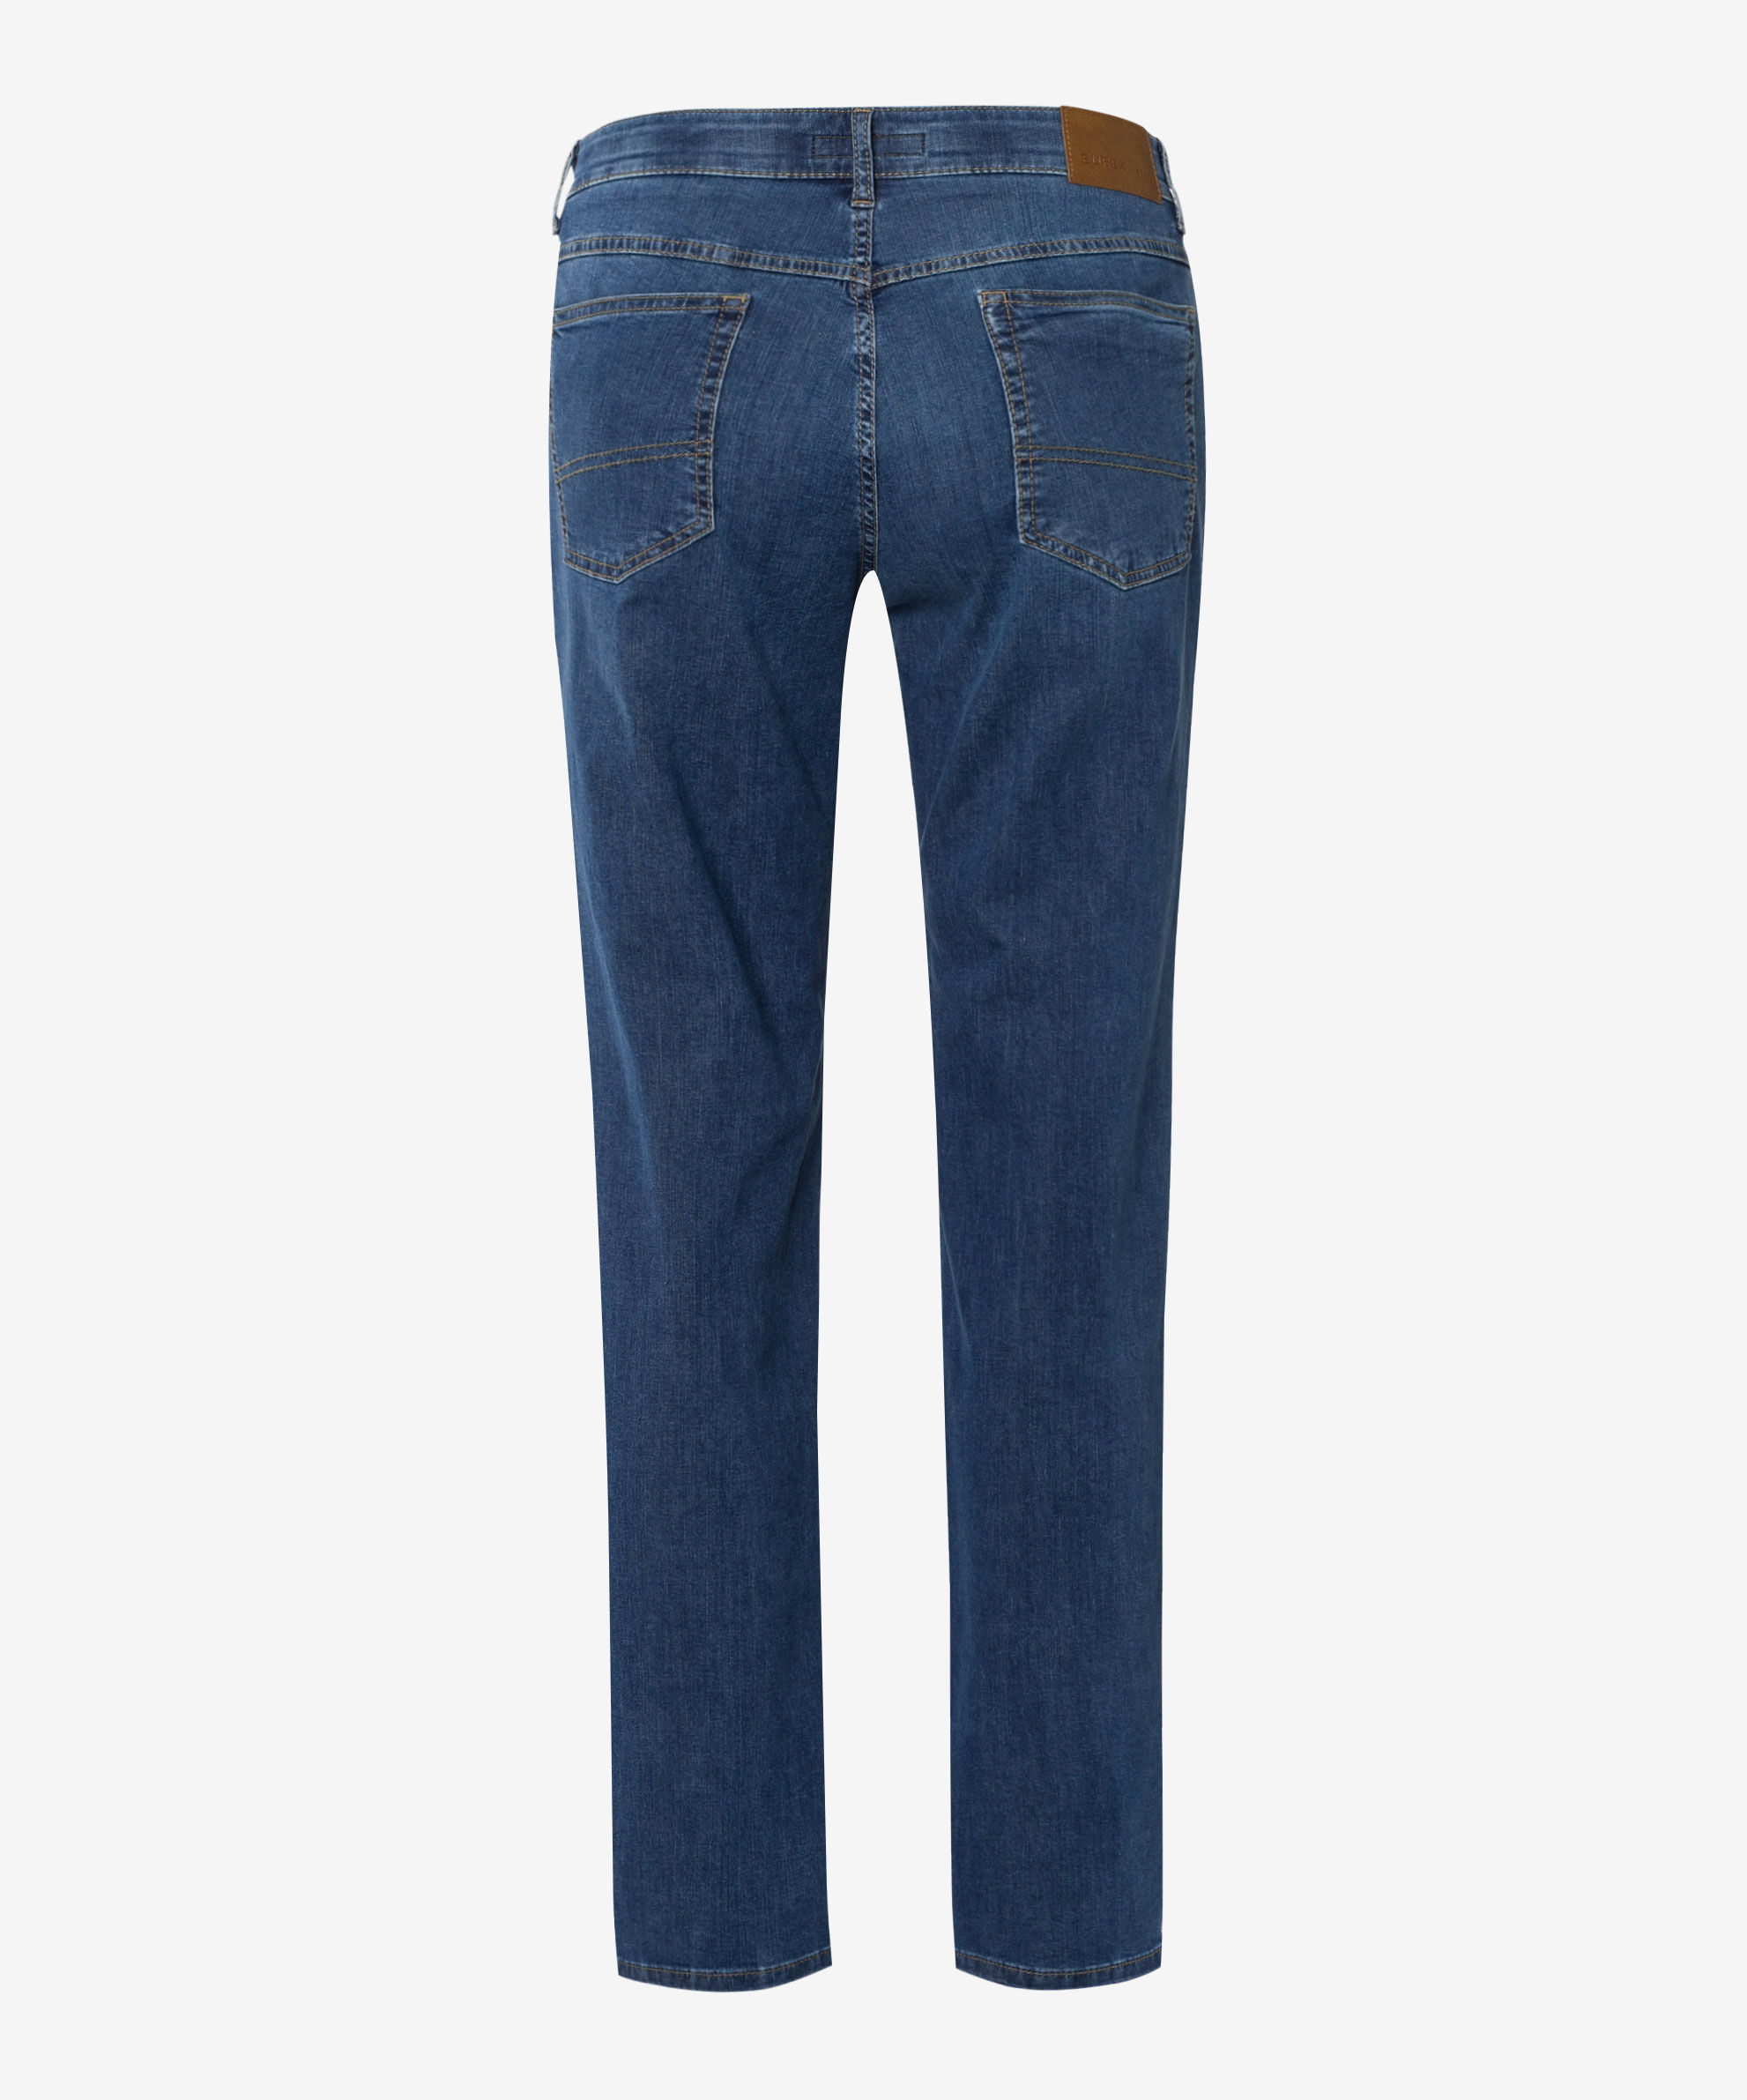 Stone Brax Blue Pocket Authentic Men\'s Jeans Denim Fashion Rozing Jan Carlos Five |